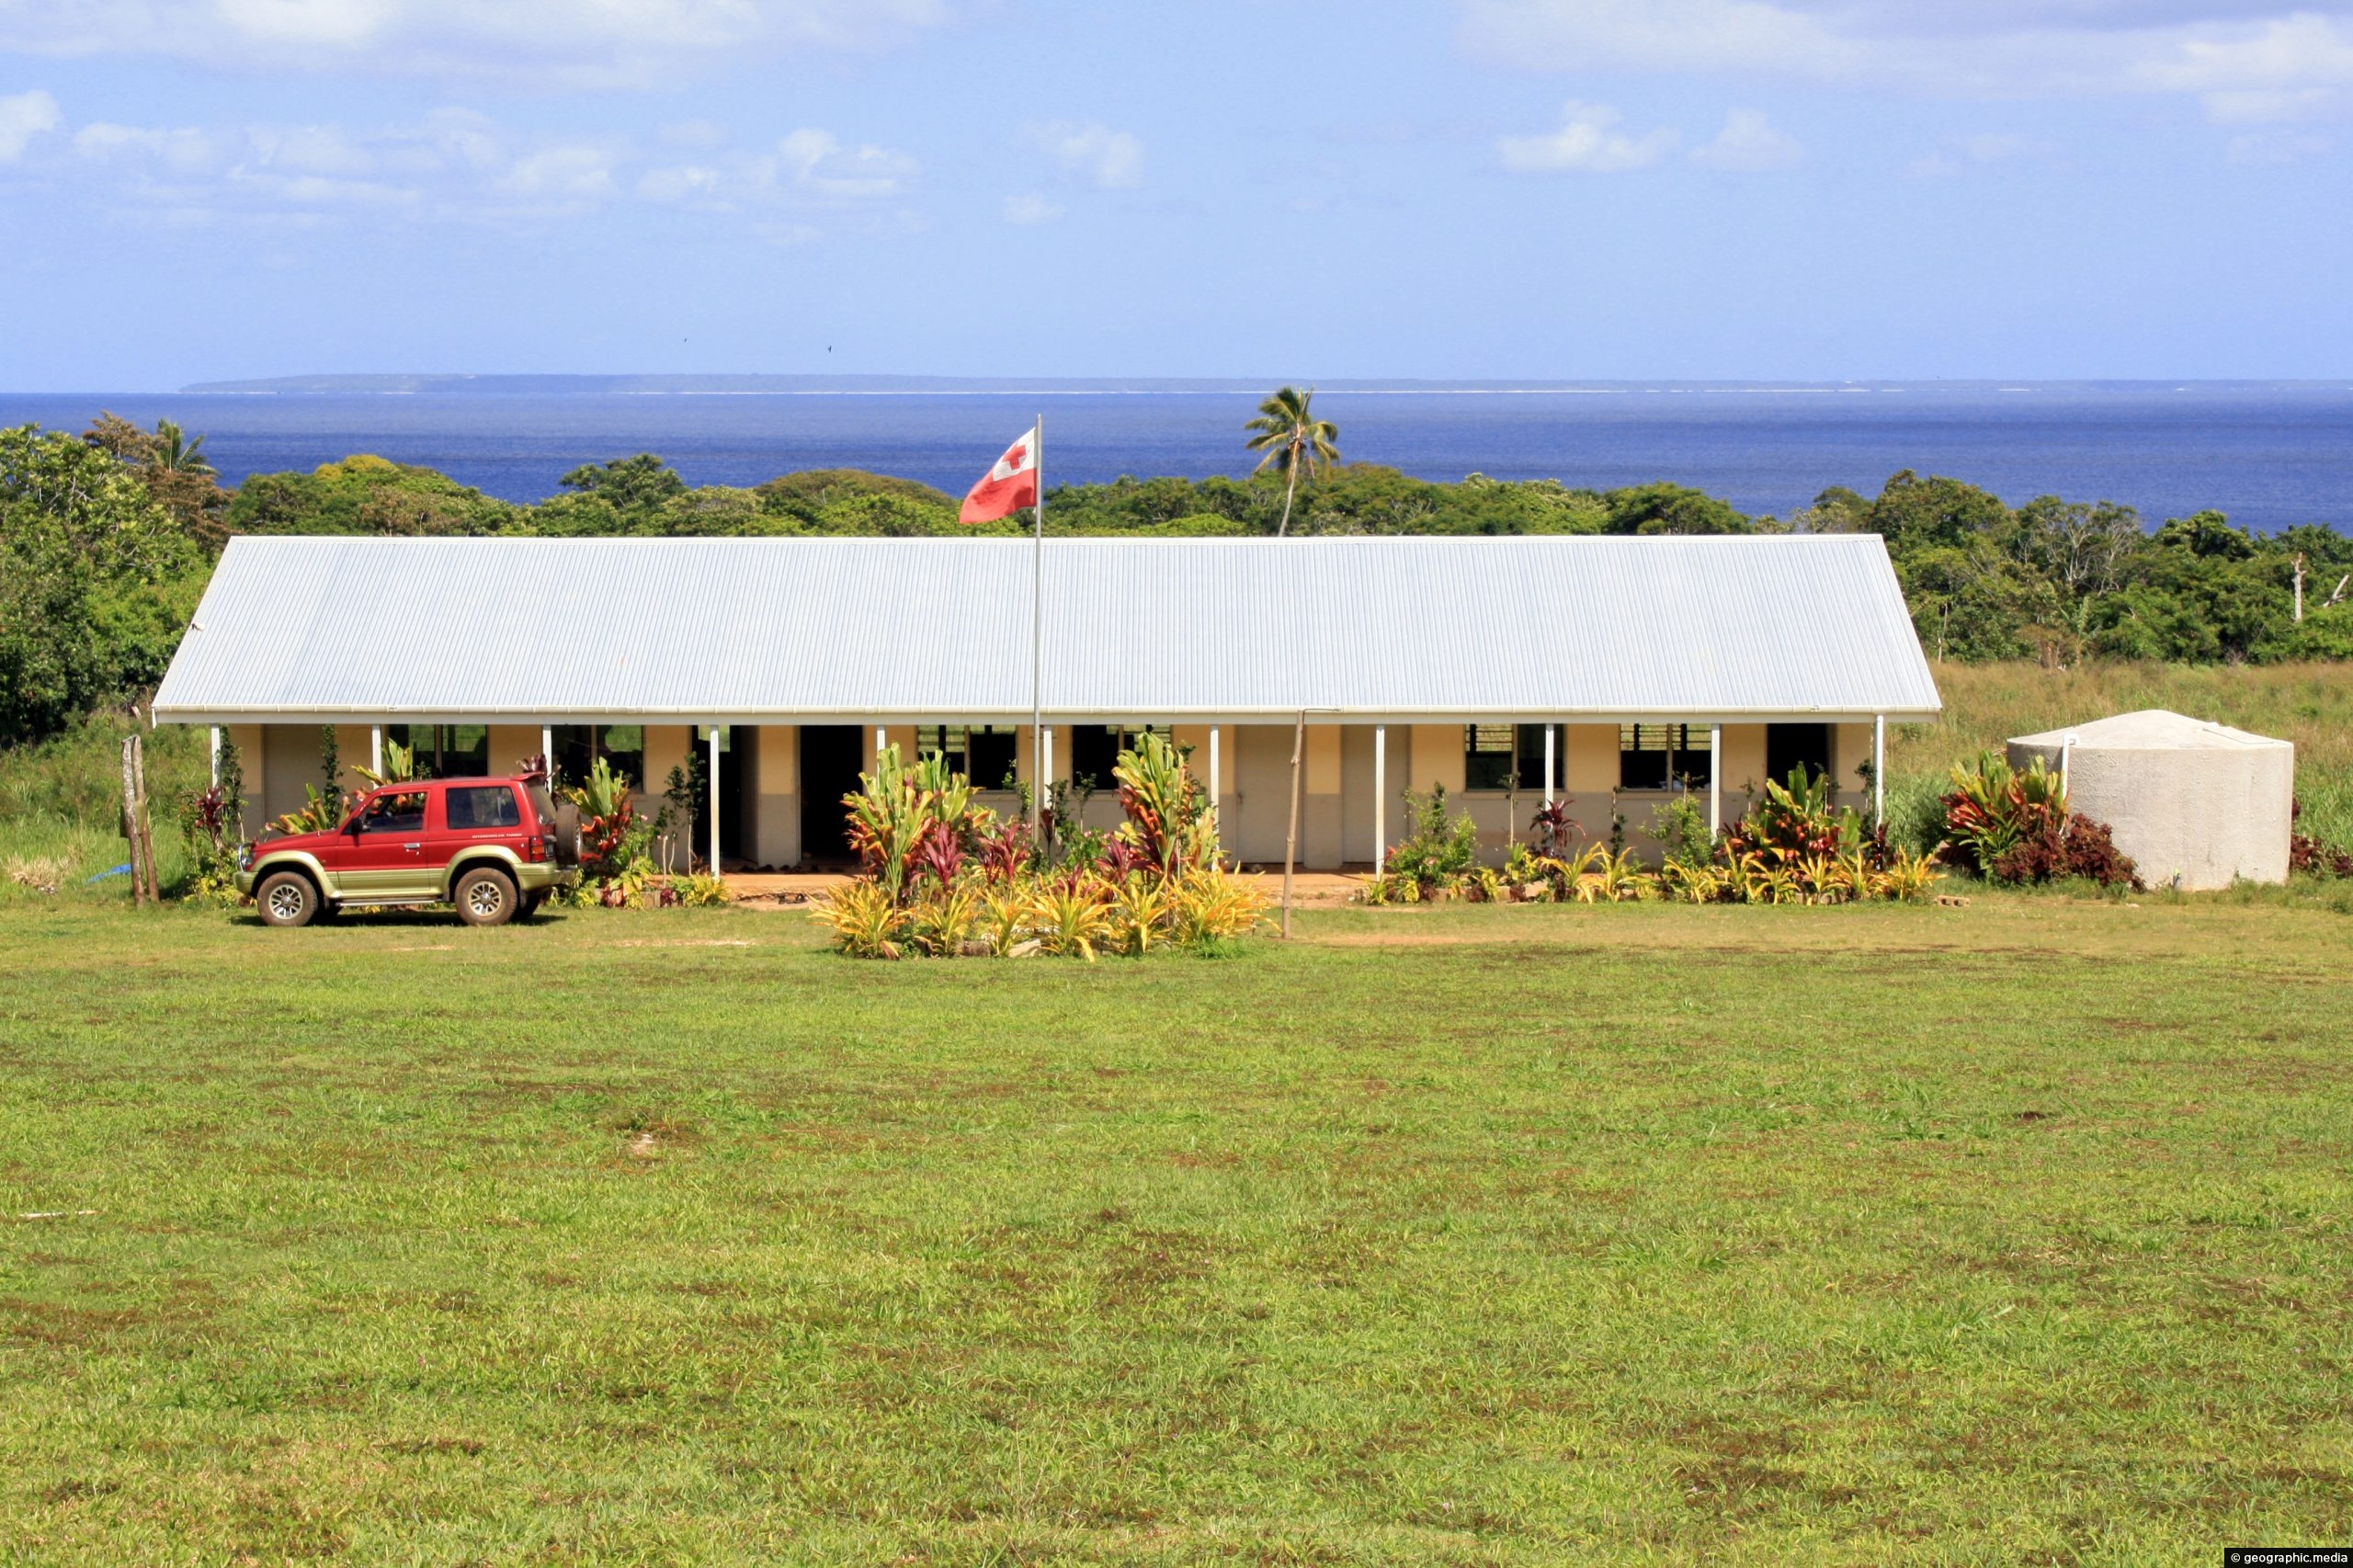 Ohonua Community Hall on Eua Island Tonga